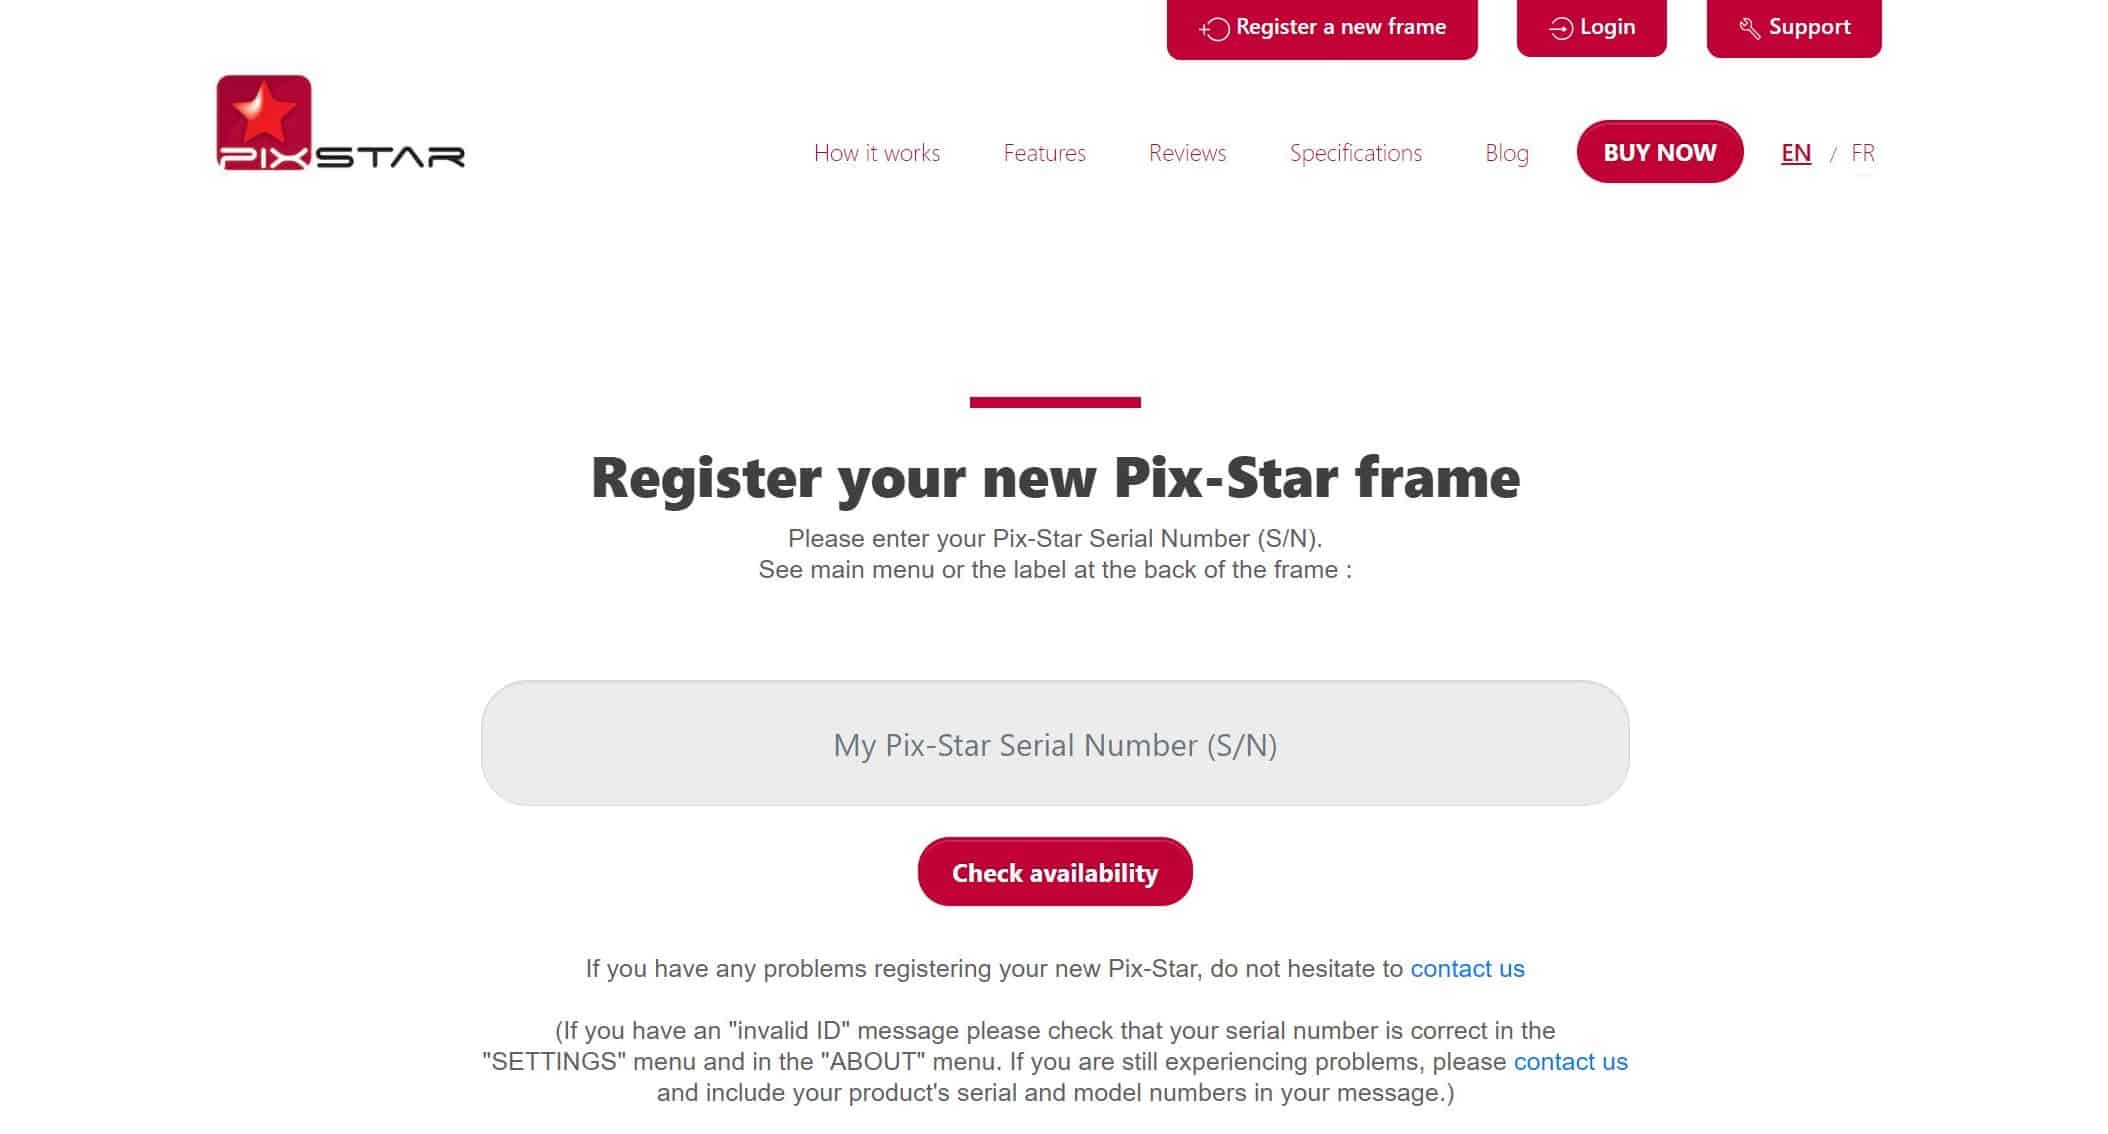 Pix-Star Register a New Frame